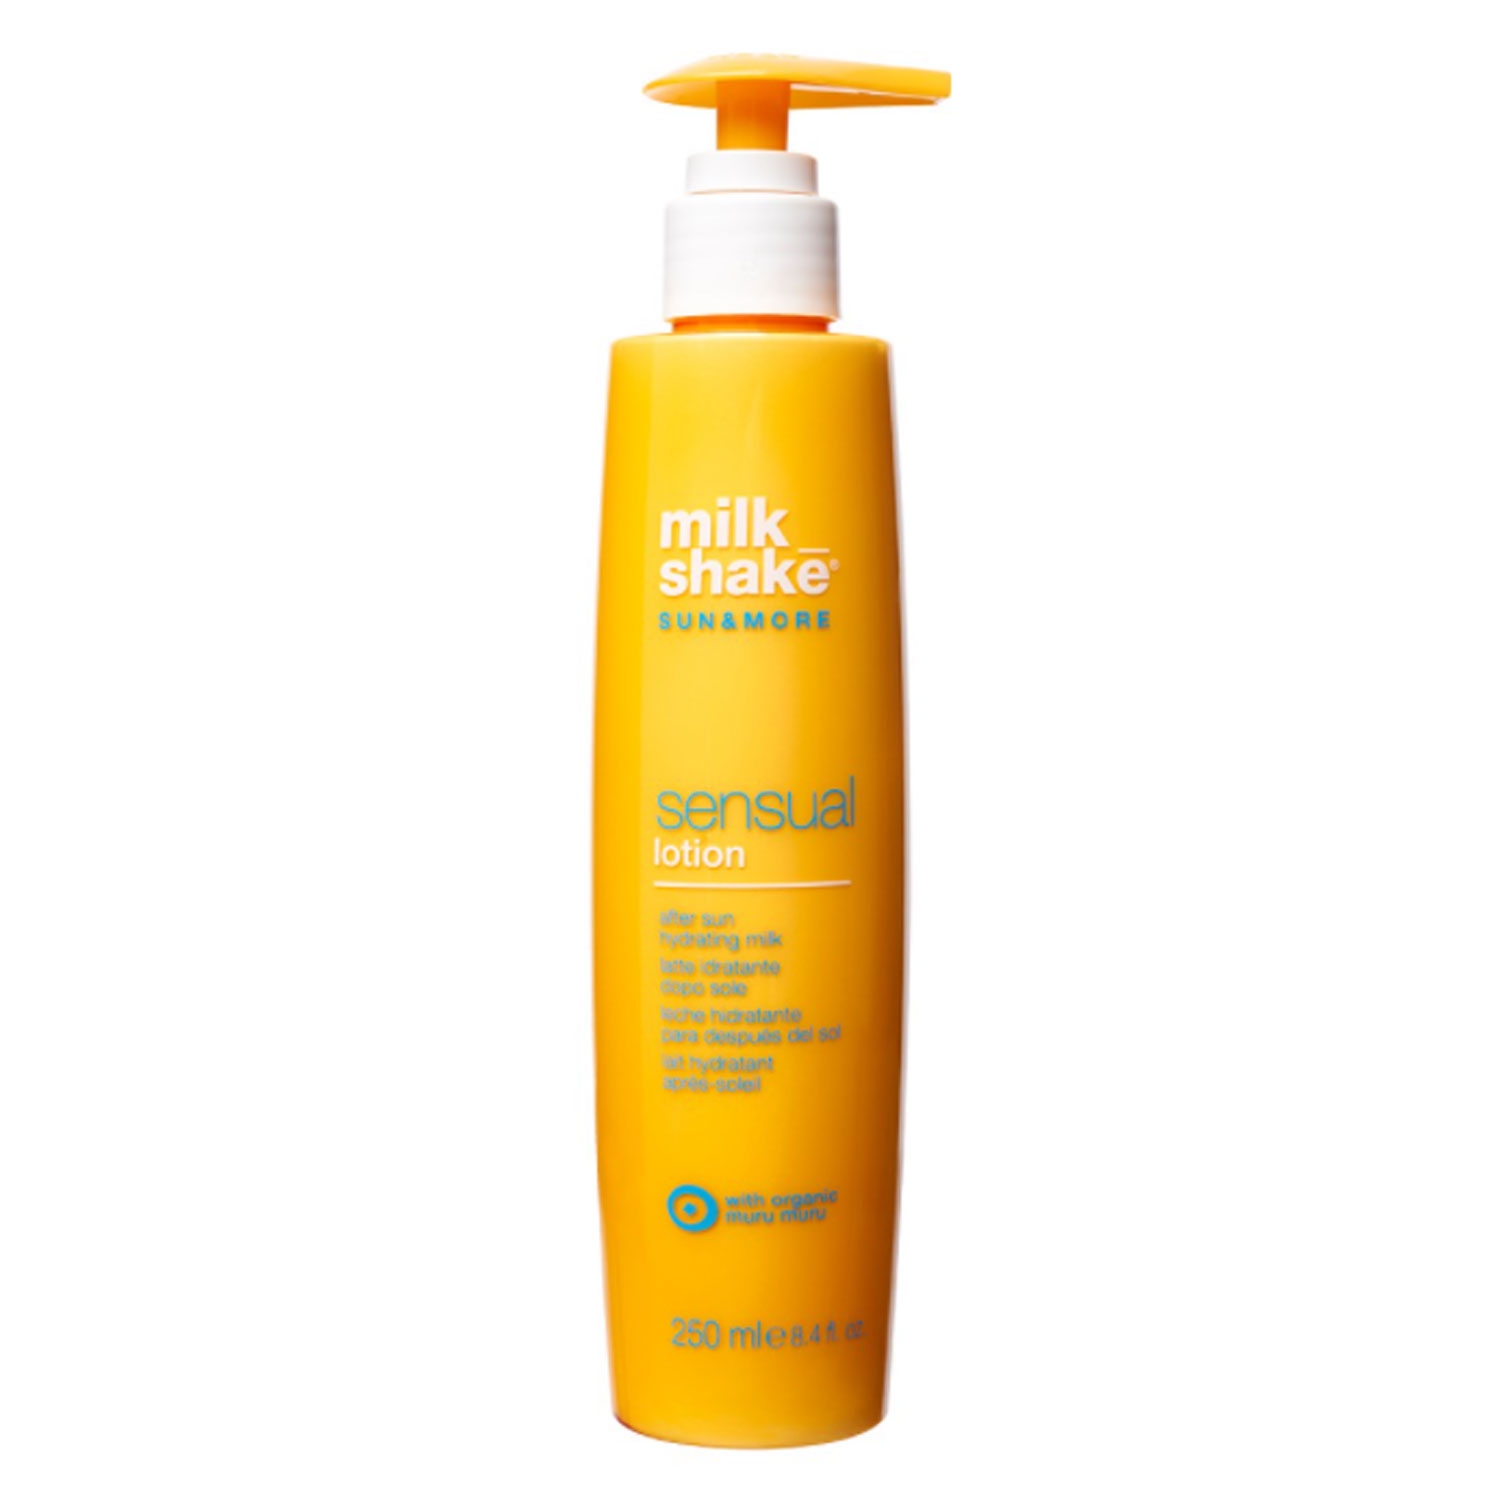 Produktbild von milk_shake sun&more - sensual lotion